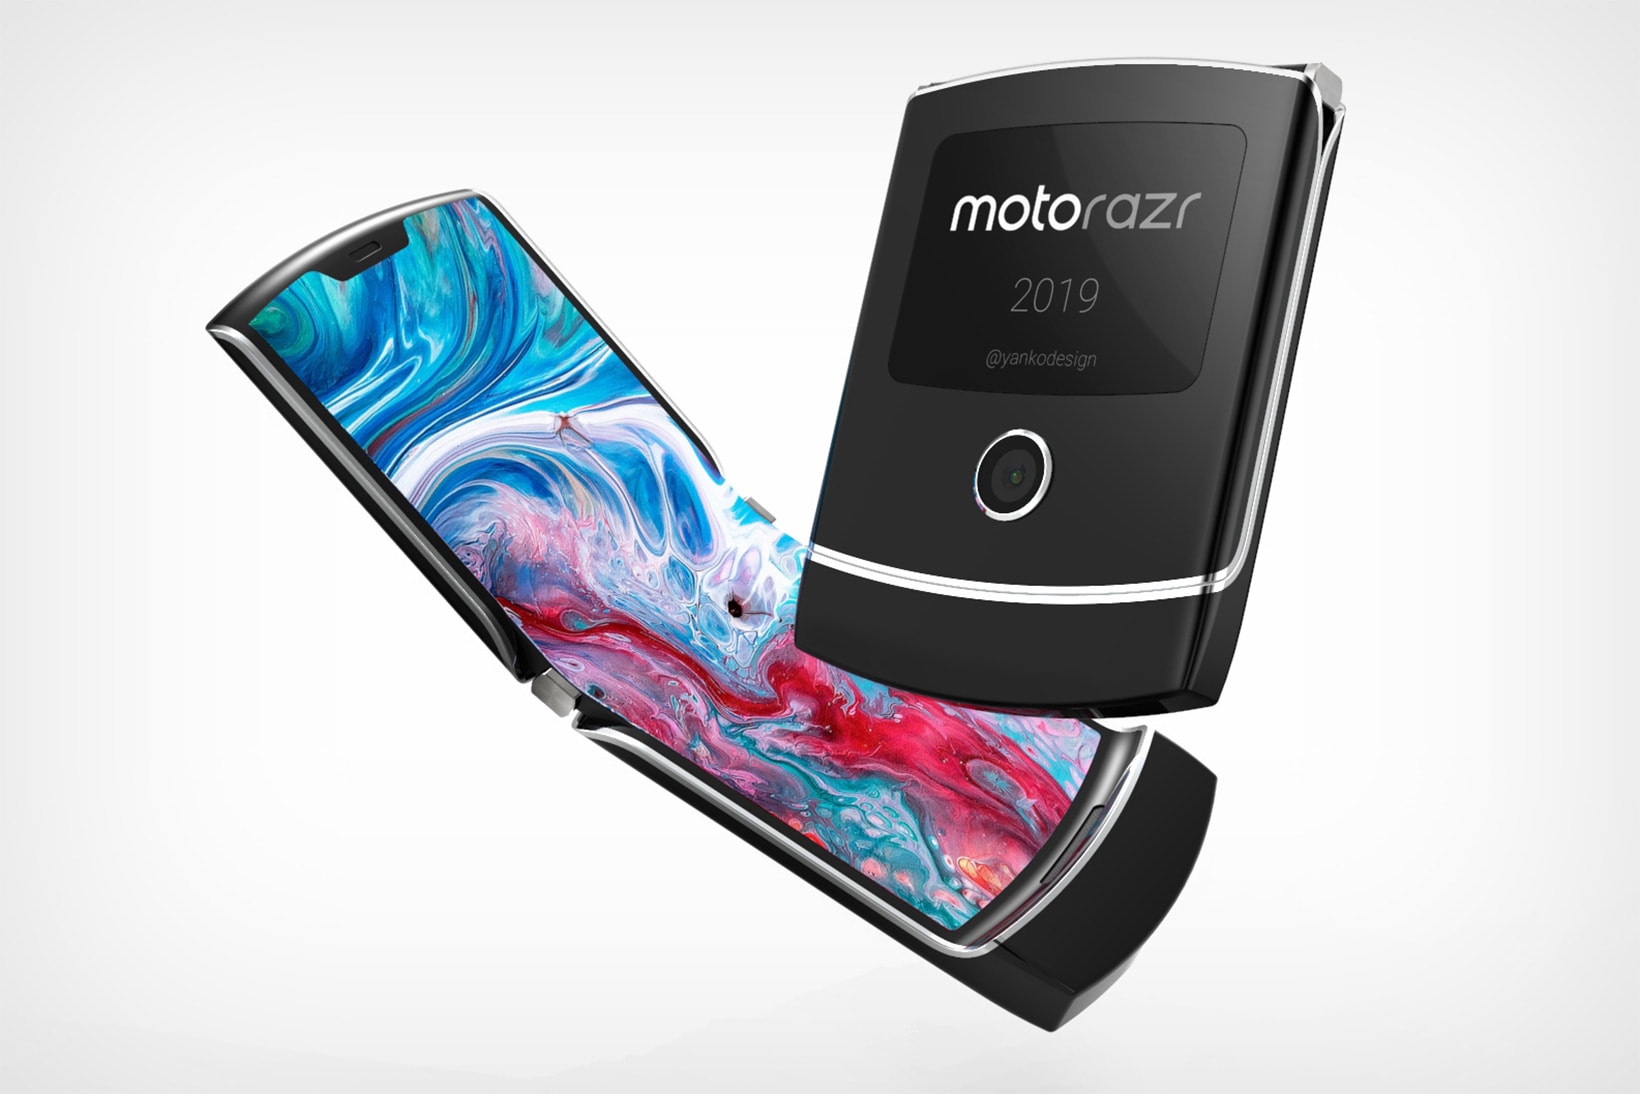 motorola razr flip phone potential first look rendering filed patent technology smartphone